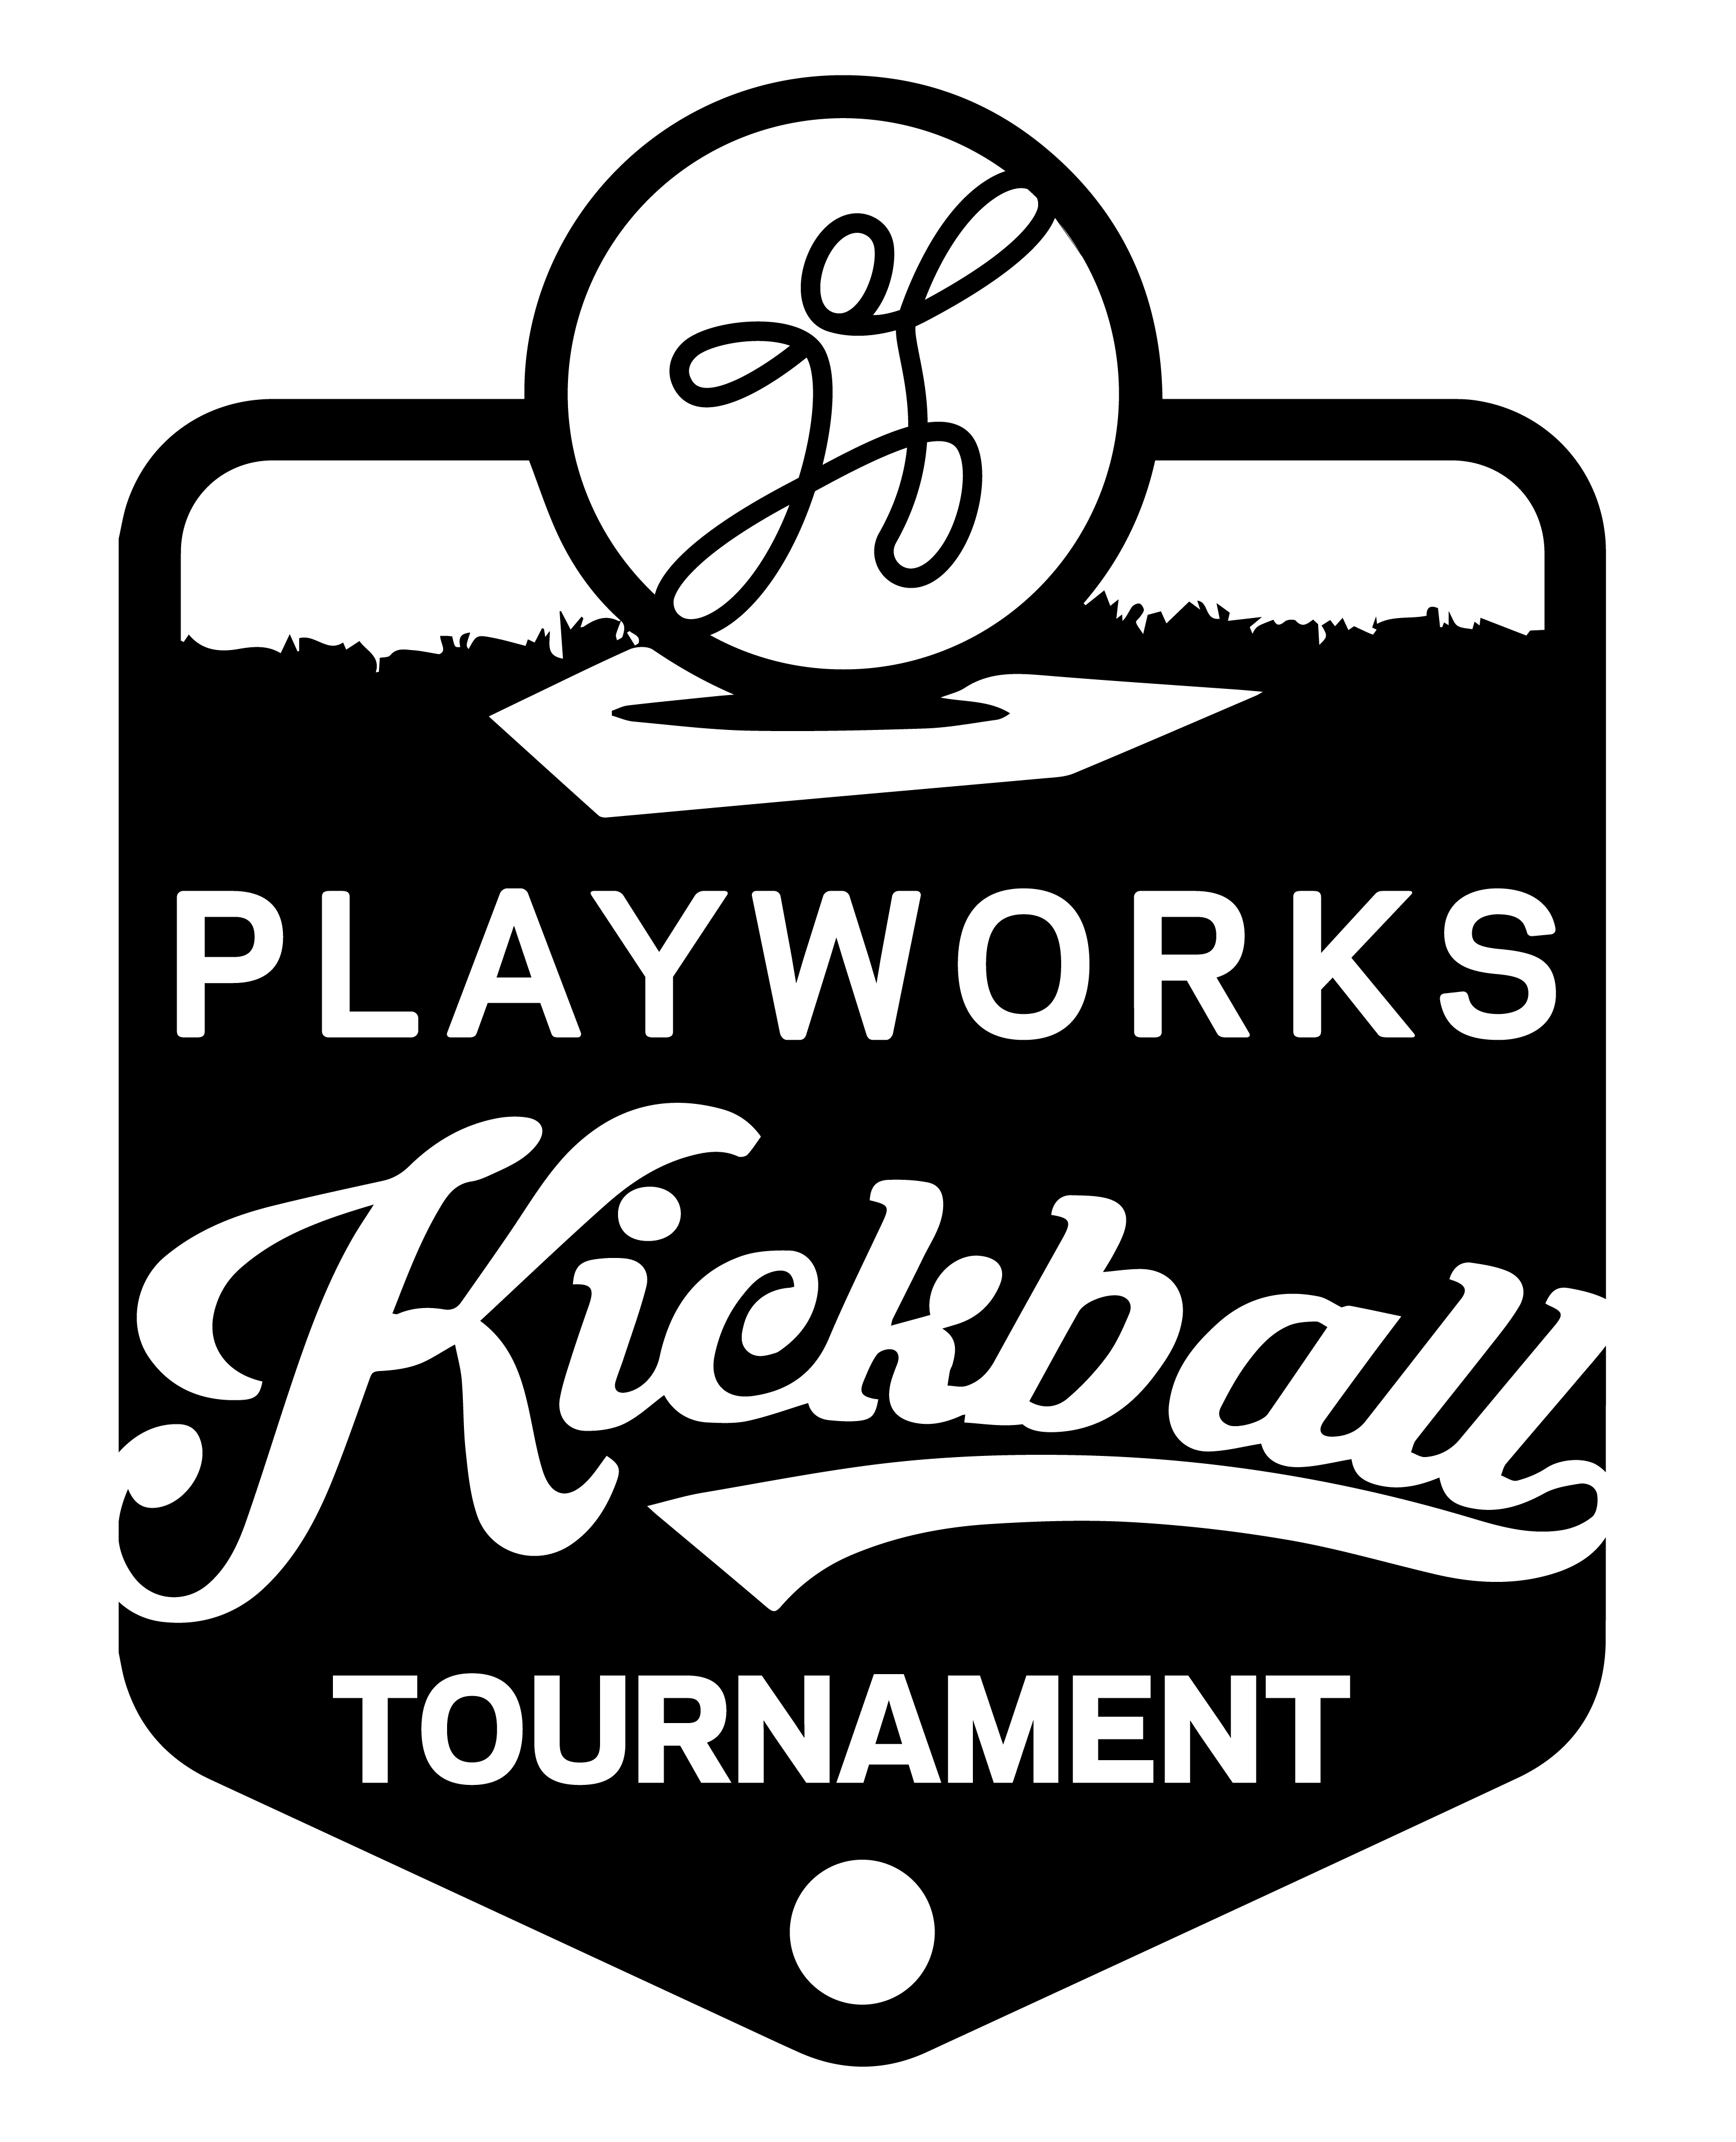 Kickball Logo - 3rd Annual Corporate Kickball 4 Kids Tournament